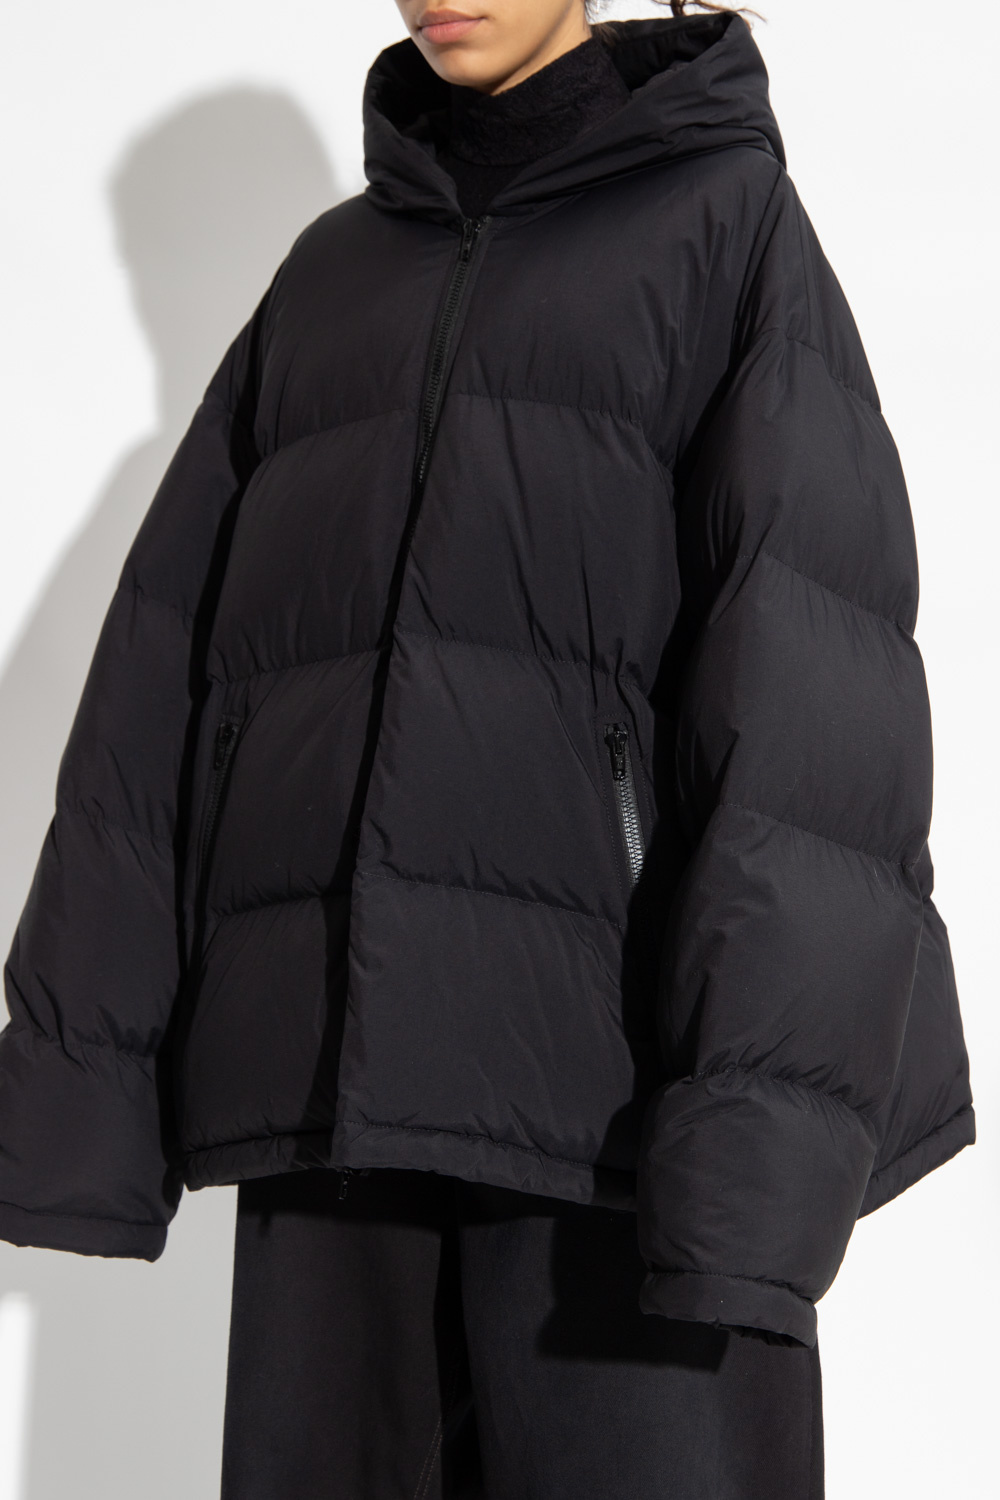 Balenciaga Oversize quilted jacket